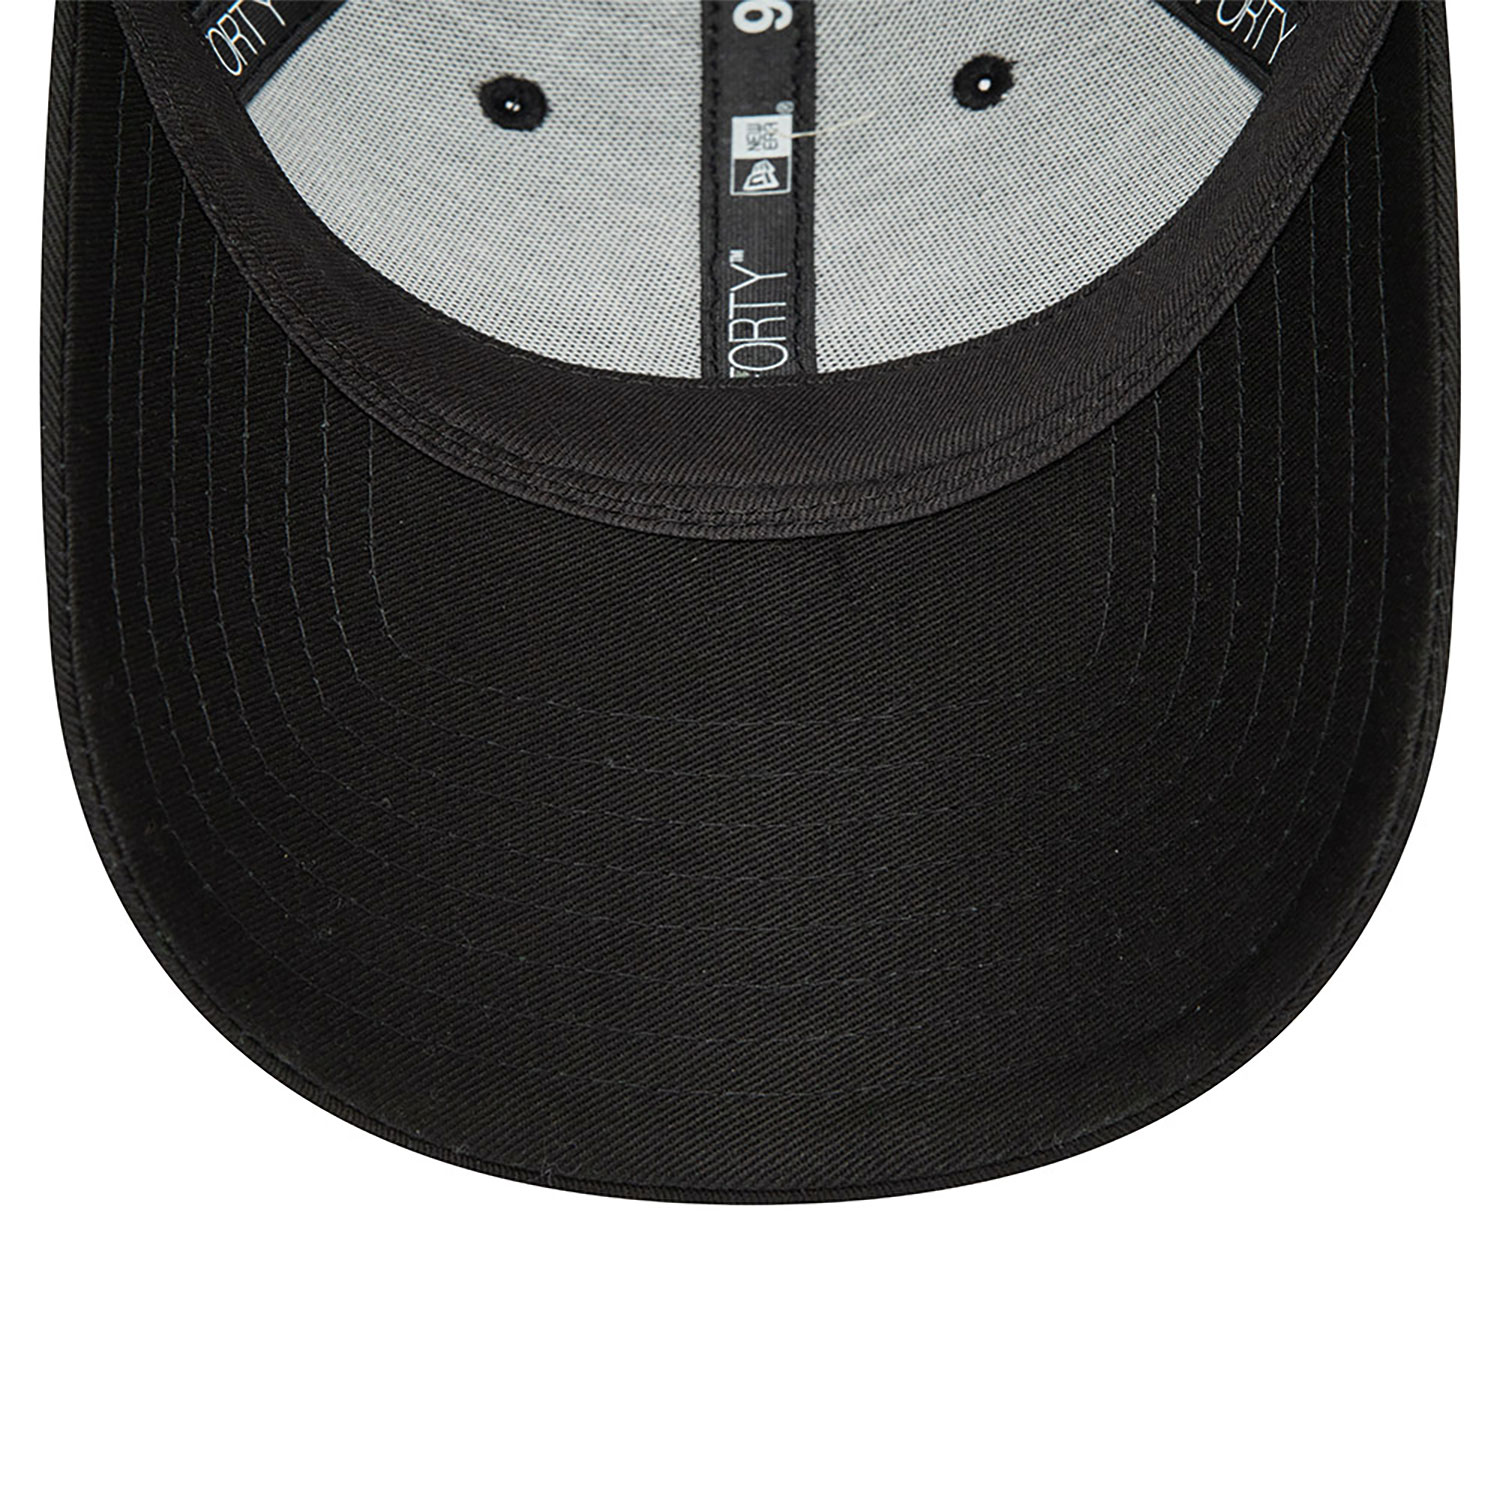 New York Yankees Womens Metallic Logo Black 9FORTY Adjustable Cap